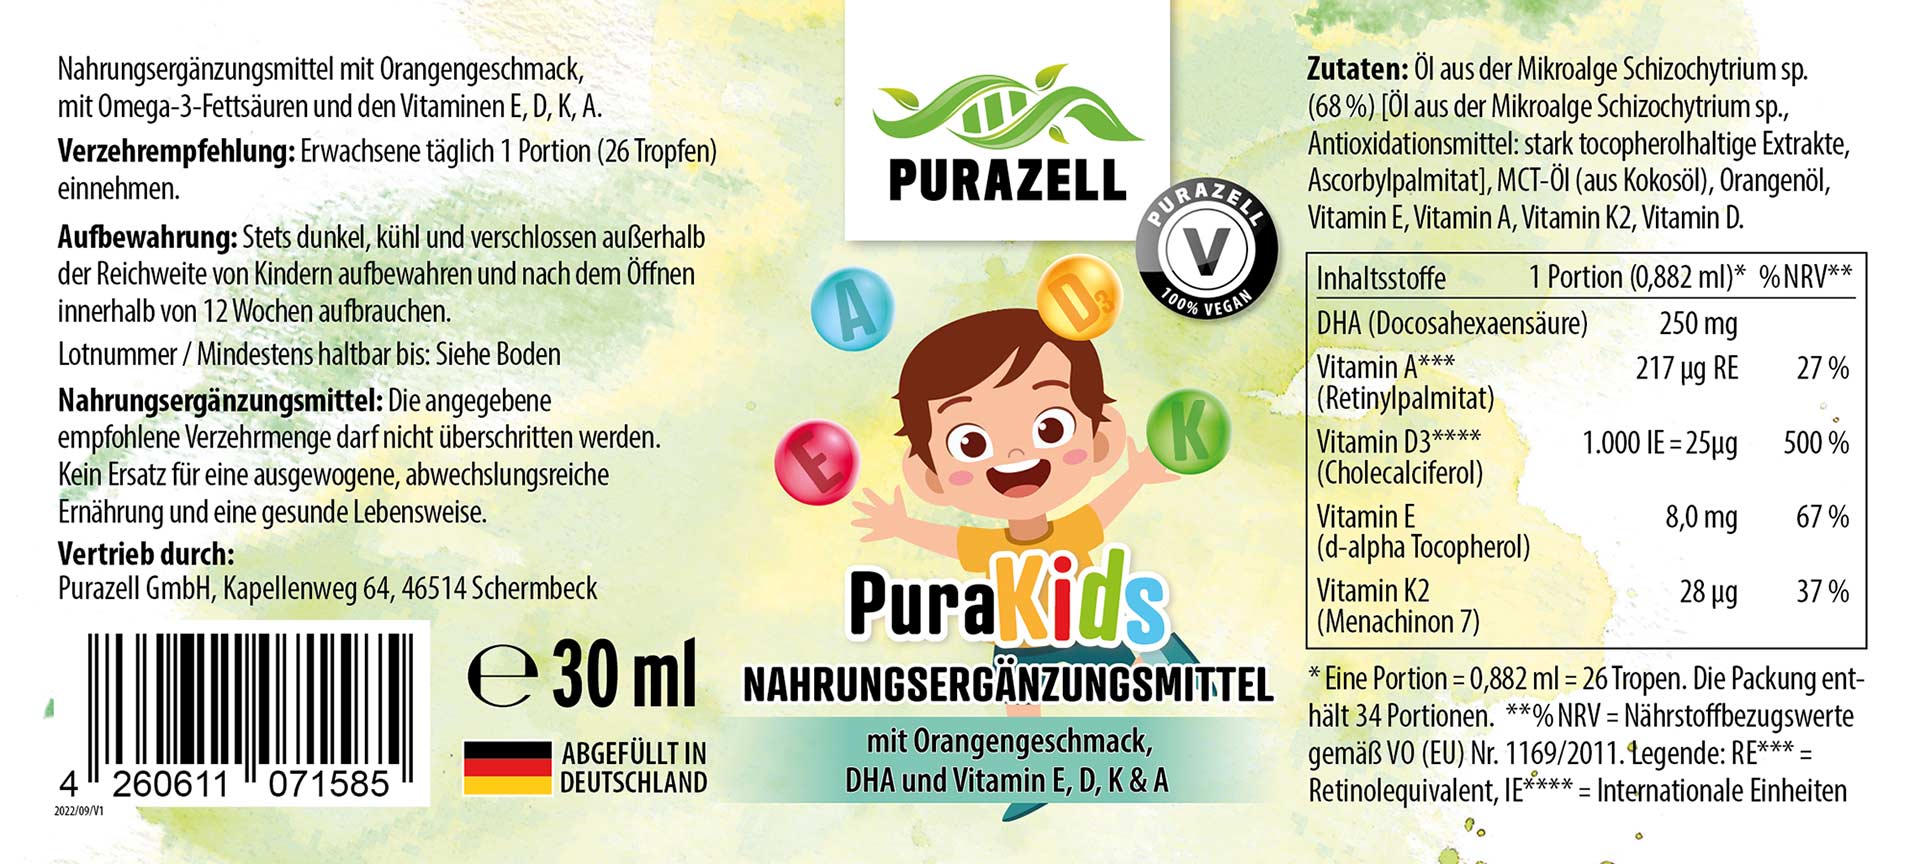 PuraKids mit DHA, Vitamin D3, K2, A & E (Vegan)